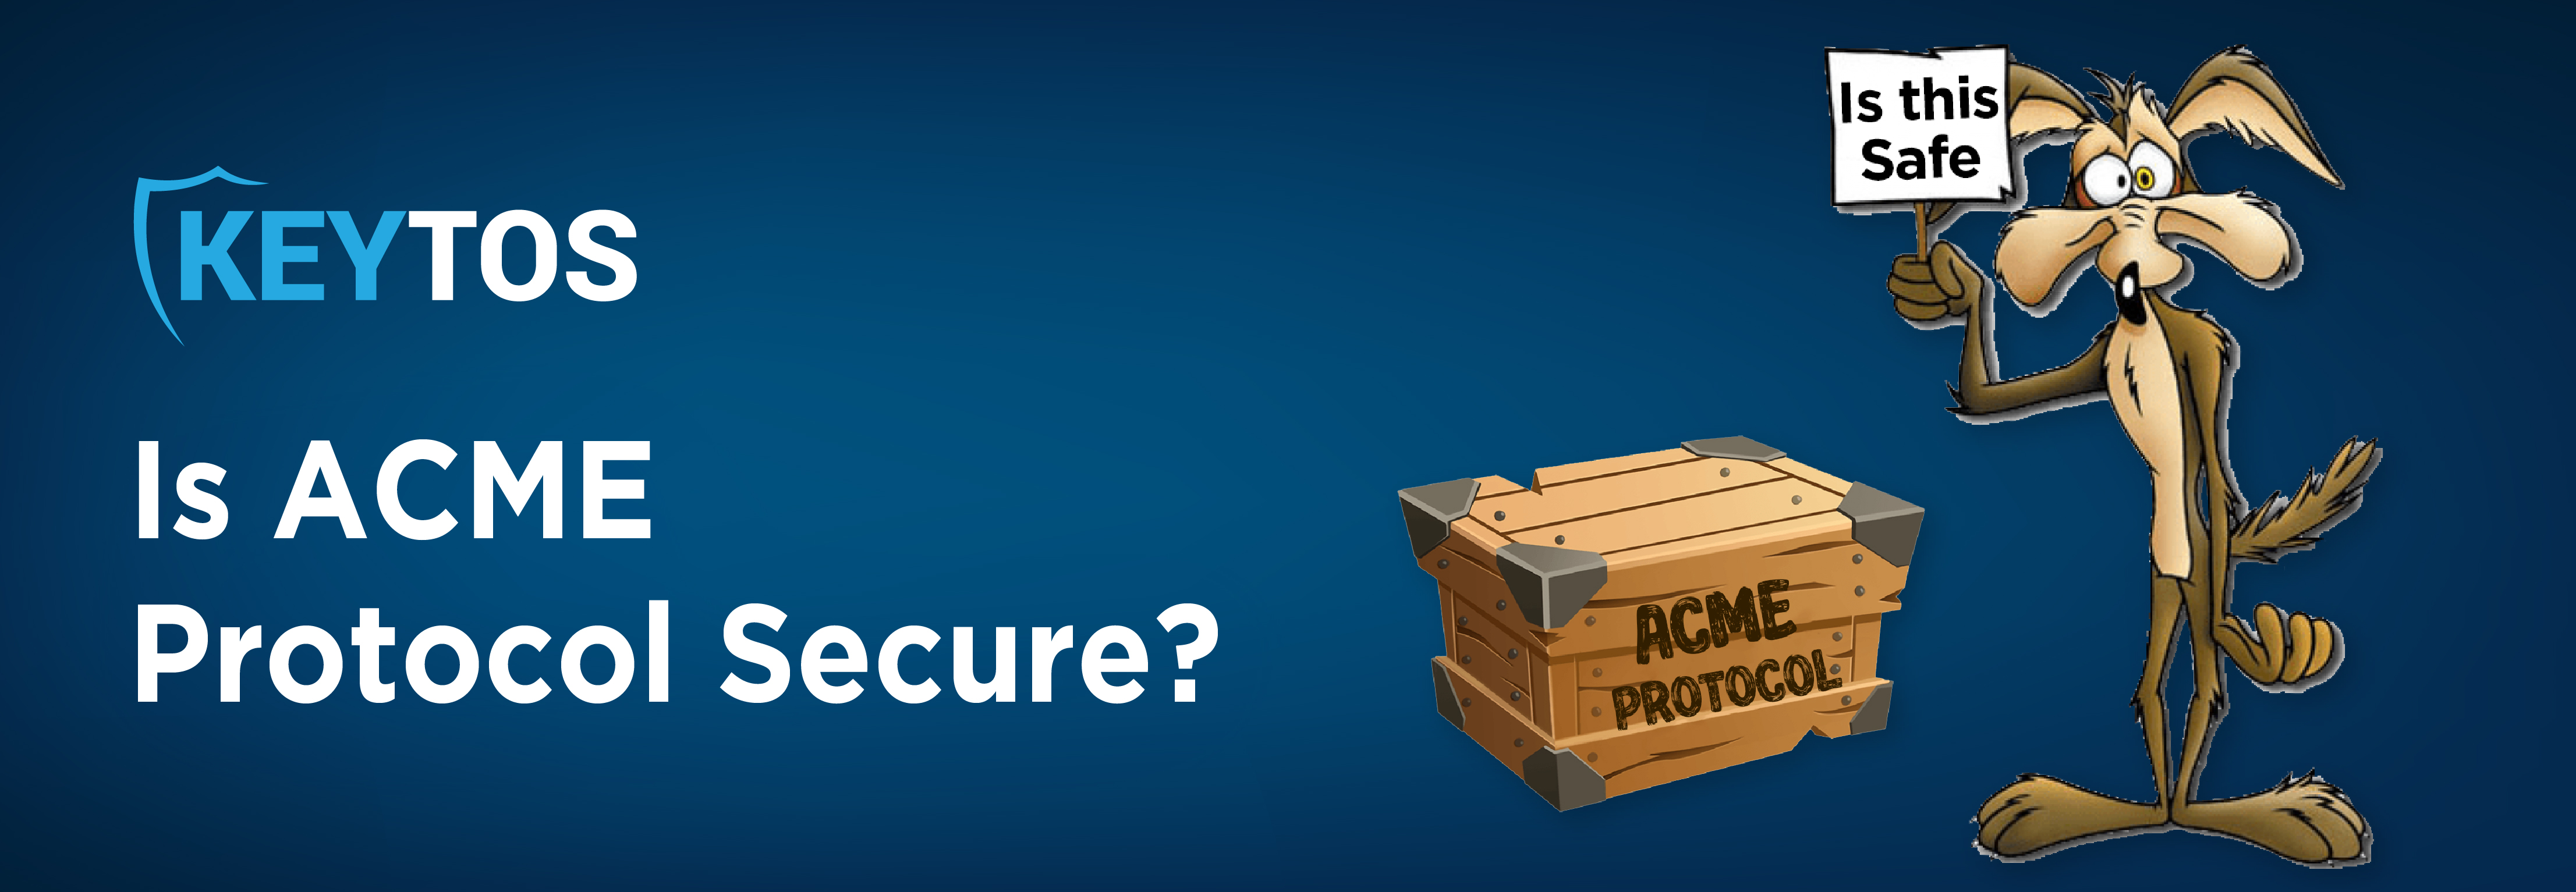 ACME Protocol - is ACME Protocol Secure?